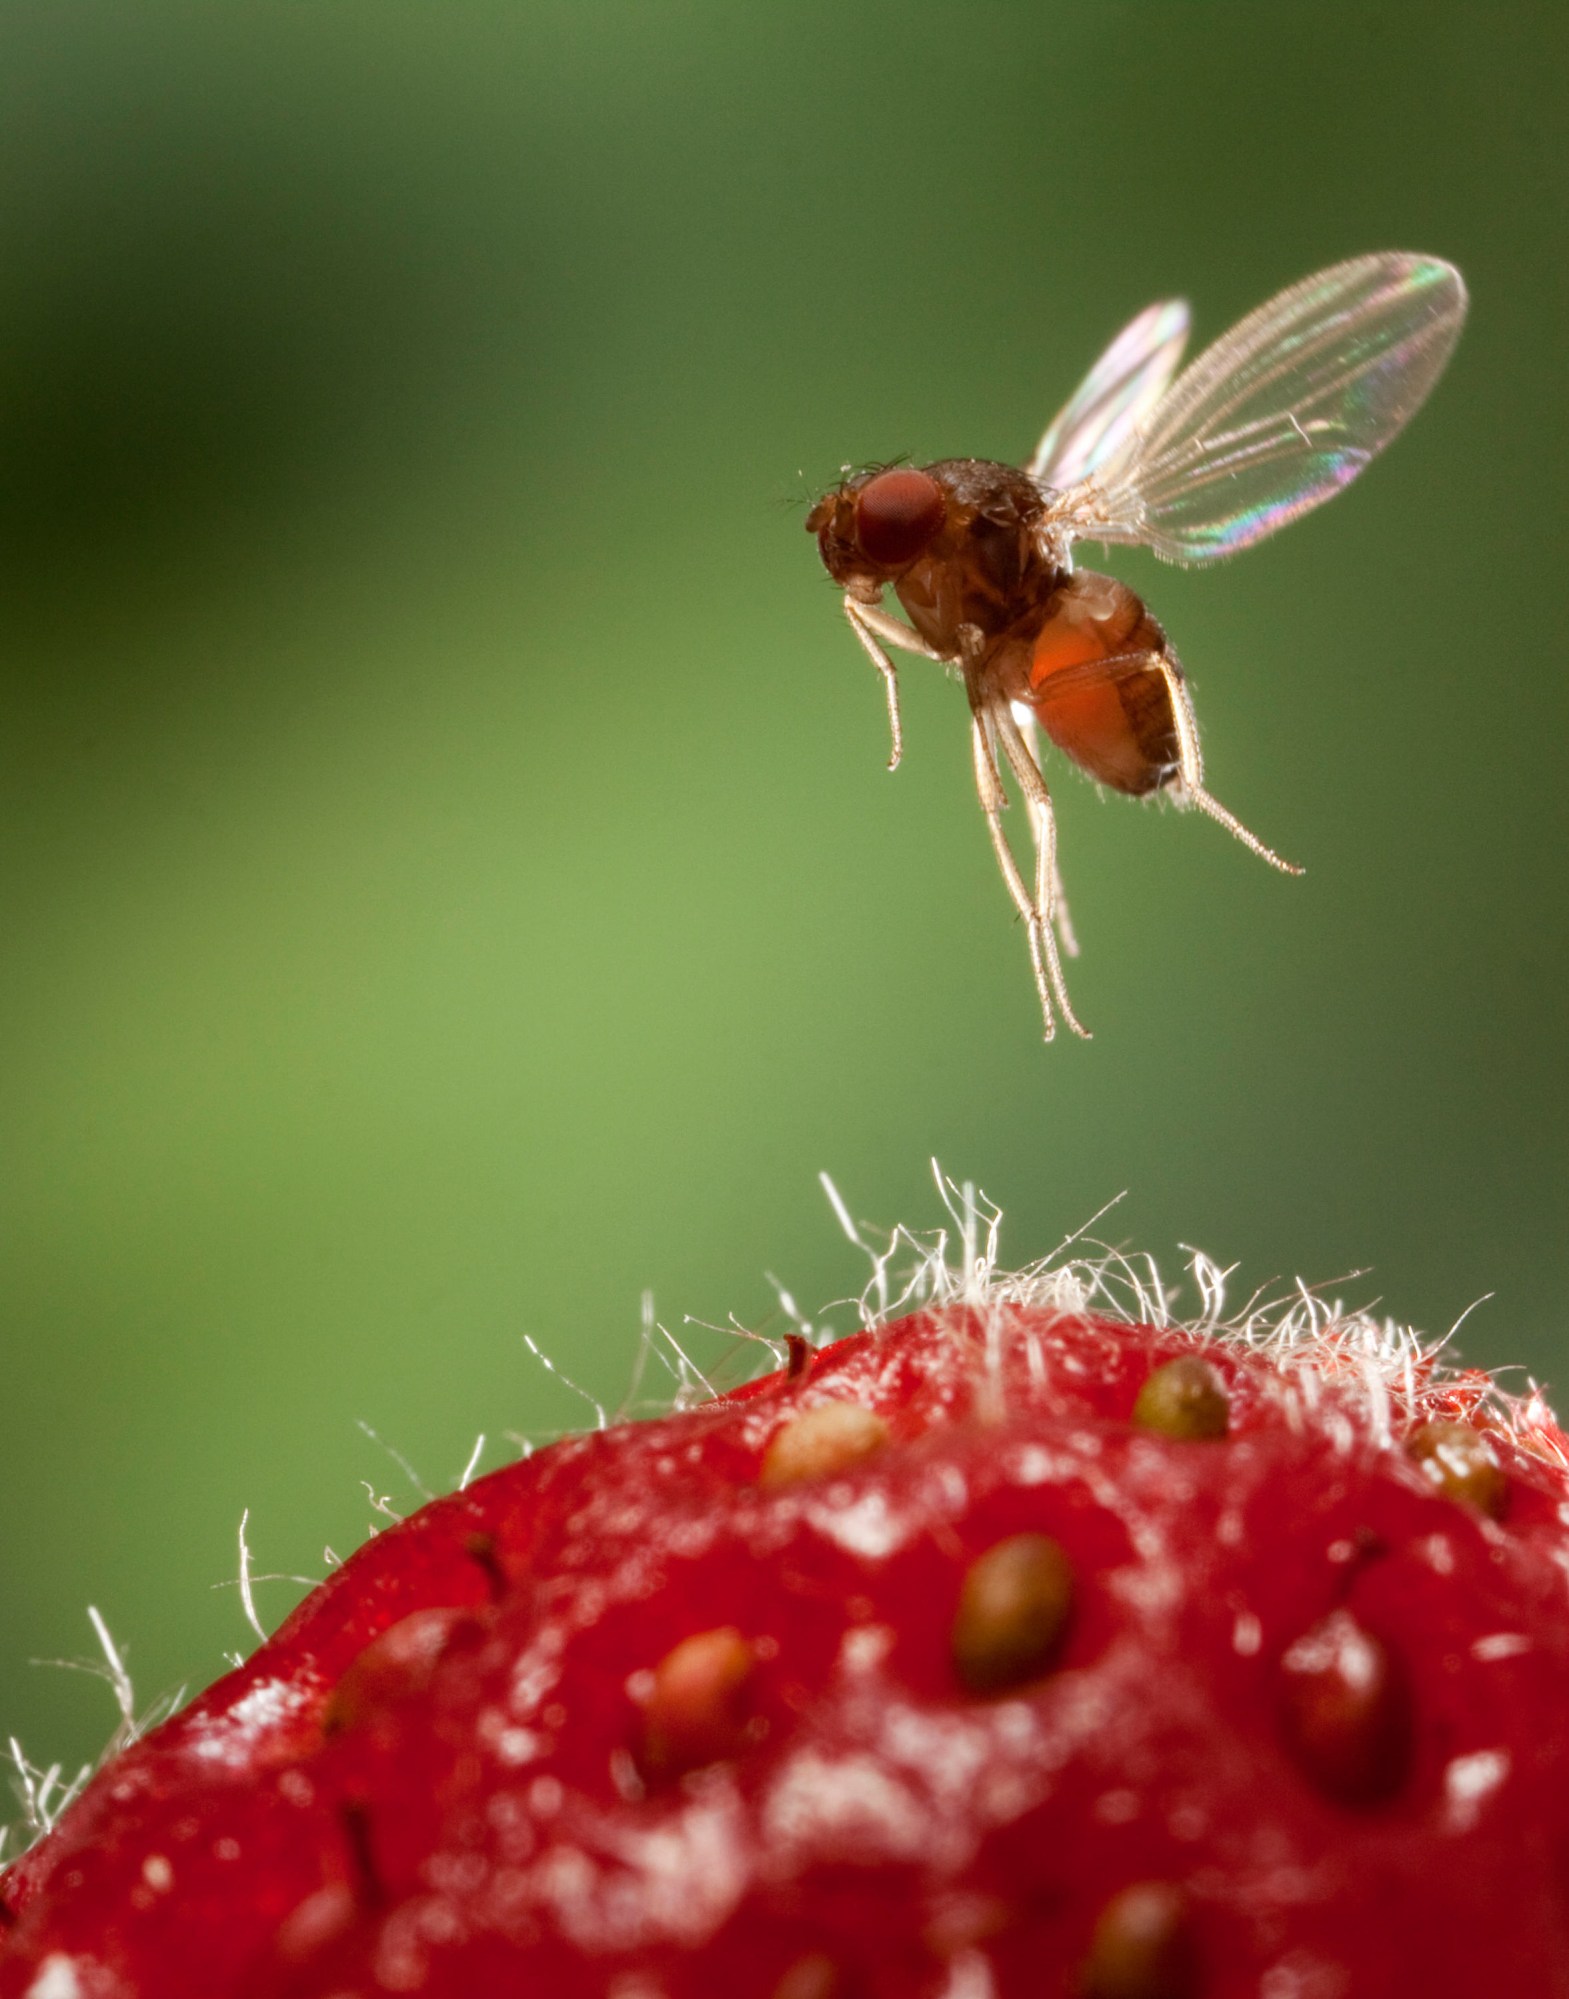 Mosca de la fruta de ala manchada hembra (Drosophila suzukii) en vuelo sobre una fresa.